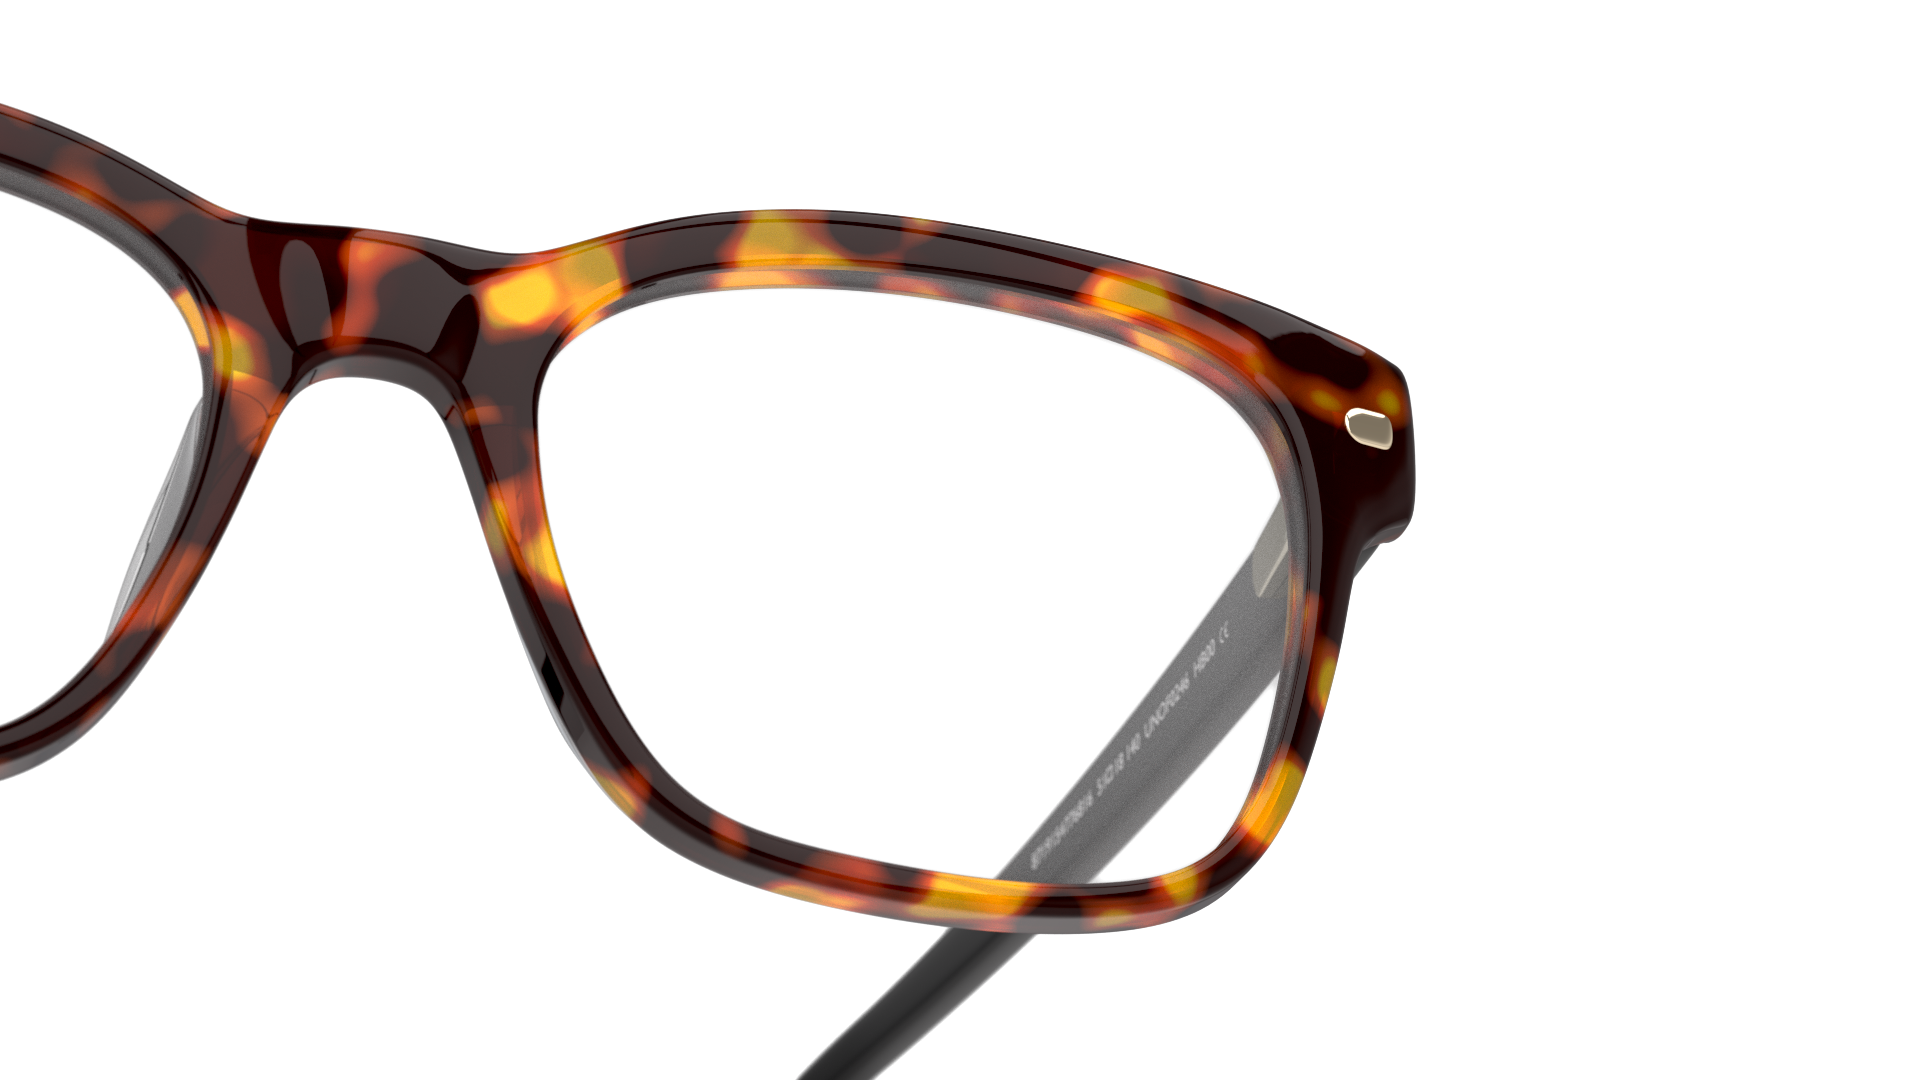 Detail01 Unofficial UNOF0246 Glasses Transparent / Tortoise Shell